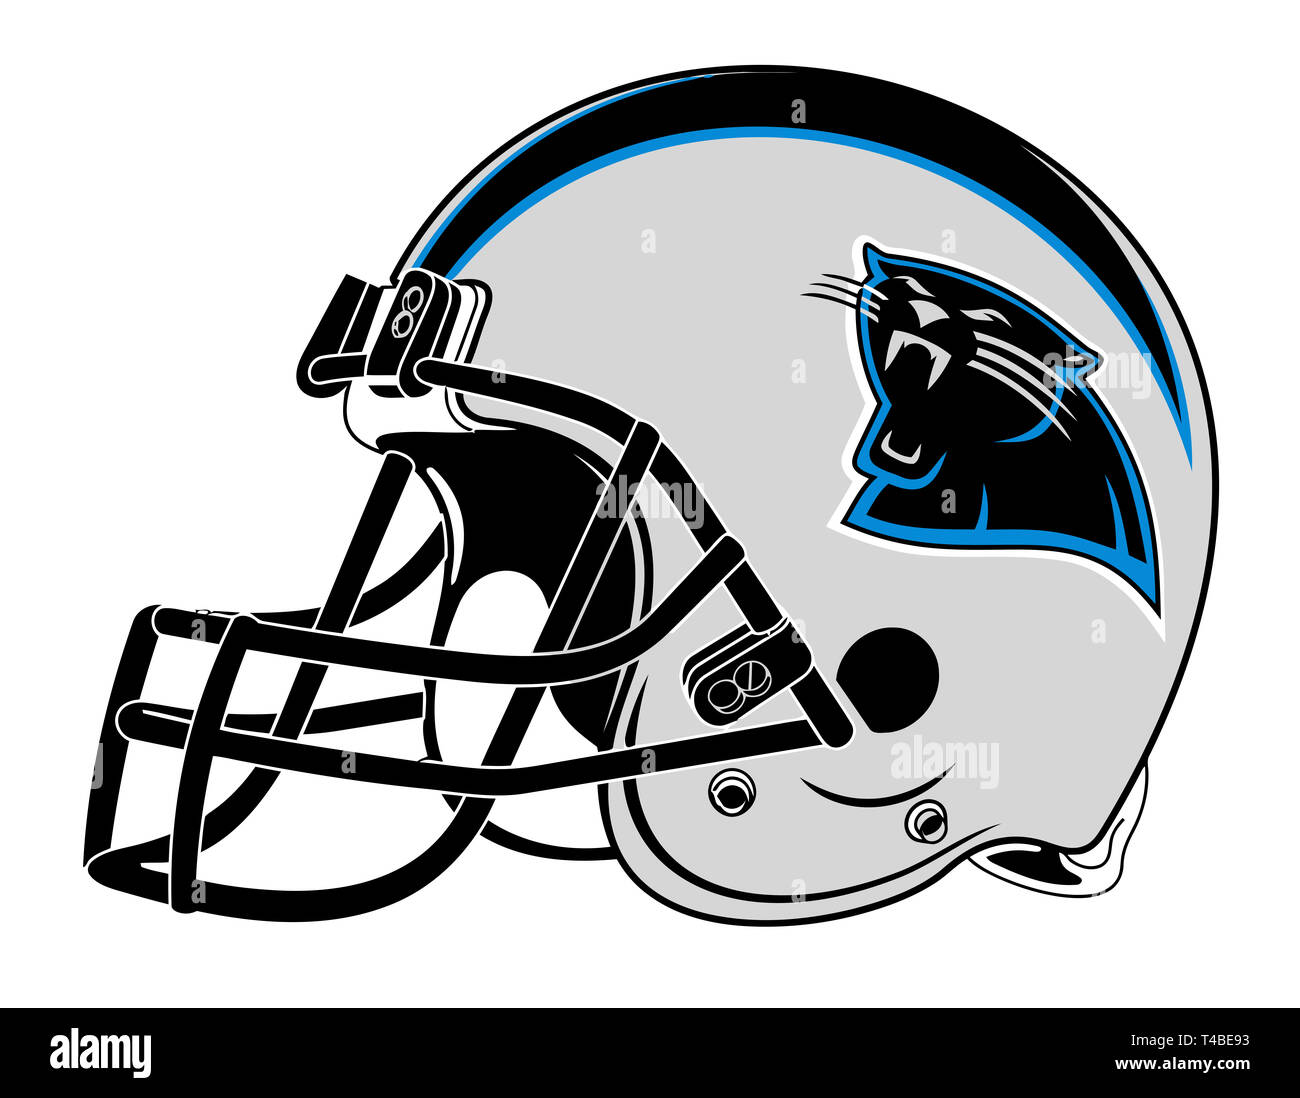 Carolina Panthers American Football Sport Helmet Nfl Illustration Stock Photo Alamy